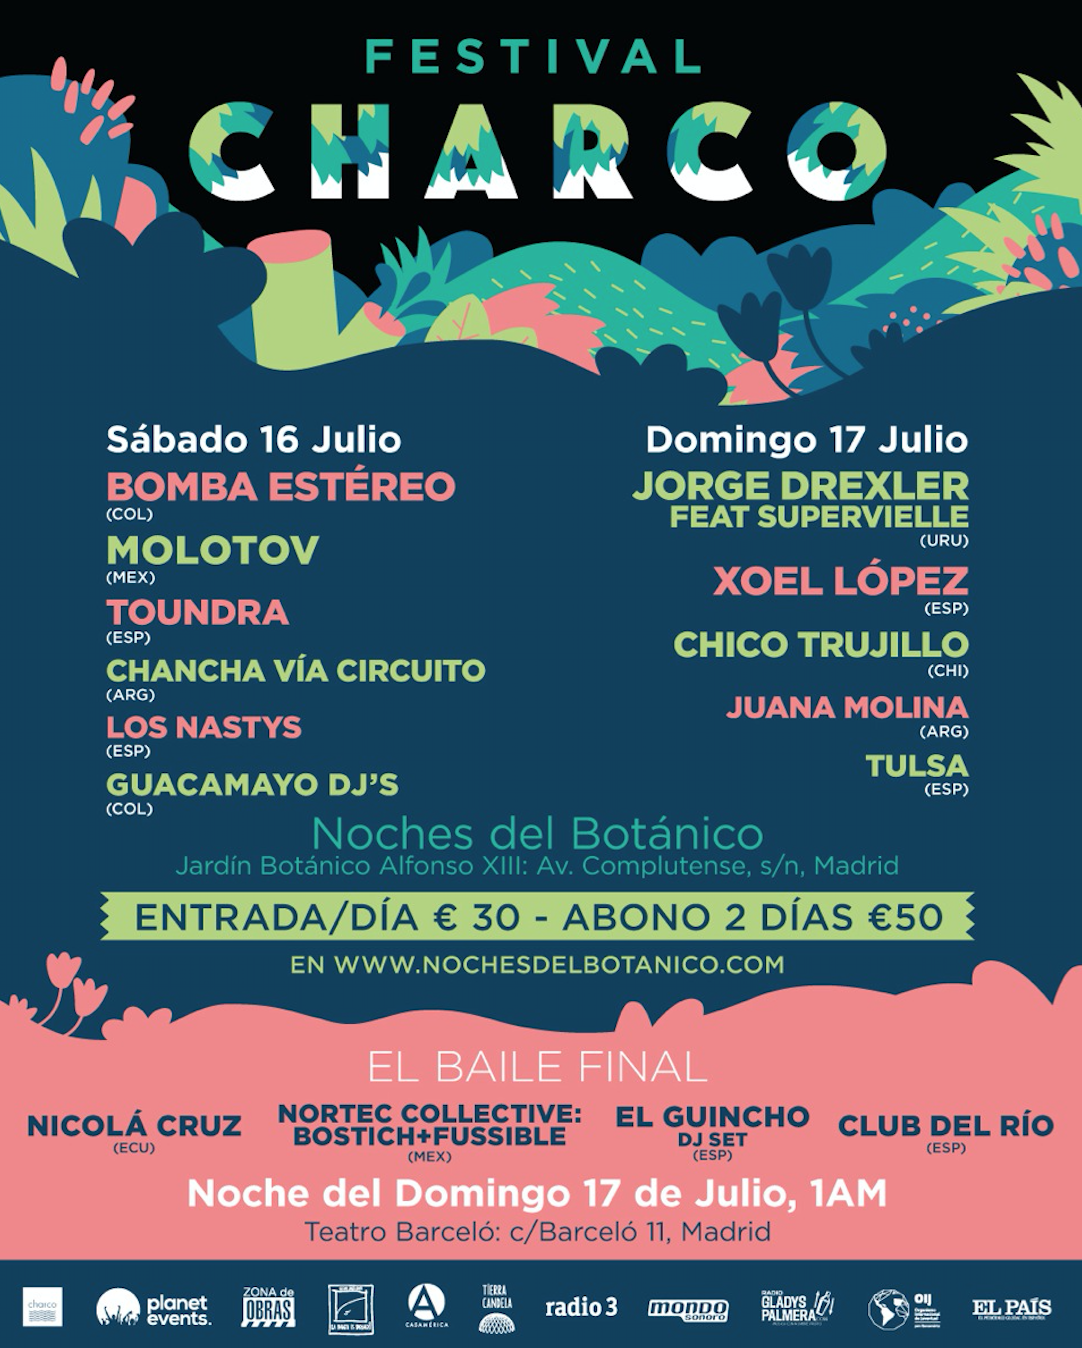 Llega el ritmo latino a Madrid con Festival Charco